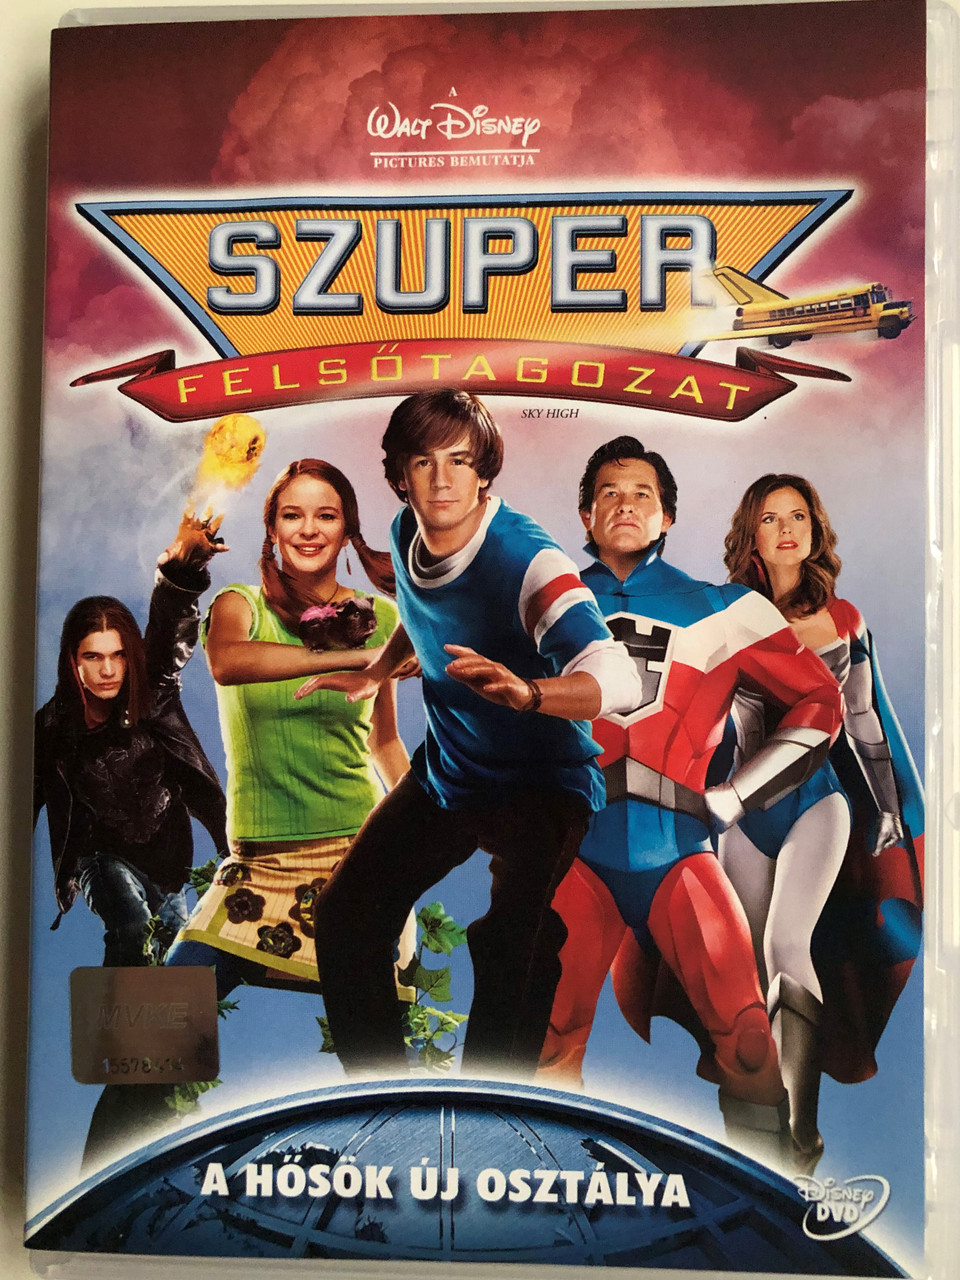 Sky High DVD 2005 Szuper felsőtagozat / Directed by Mike Mitchell /  Starring: Kelly Preston, Michael Angarano, Danielle Panabaker, Mary  Elizabeth - bibleinmylanguage